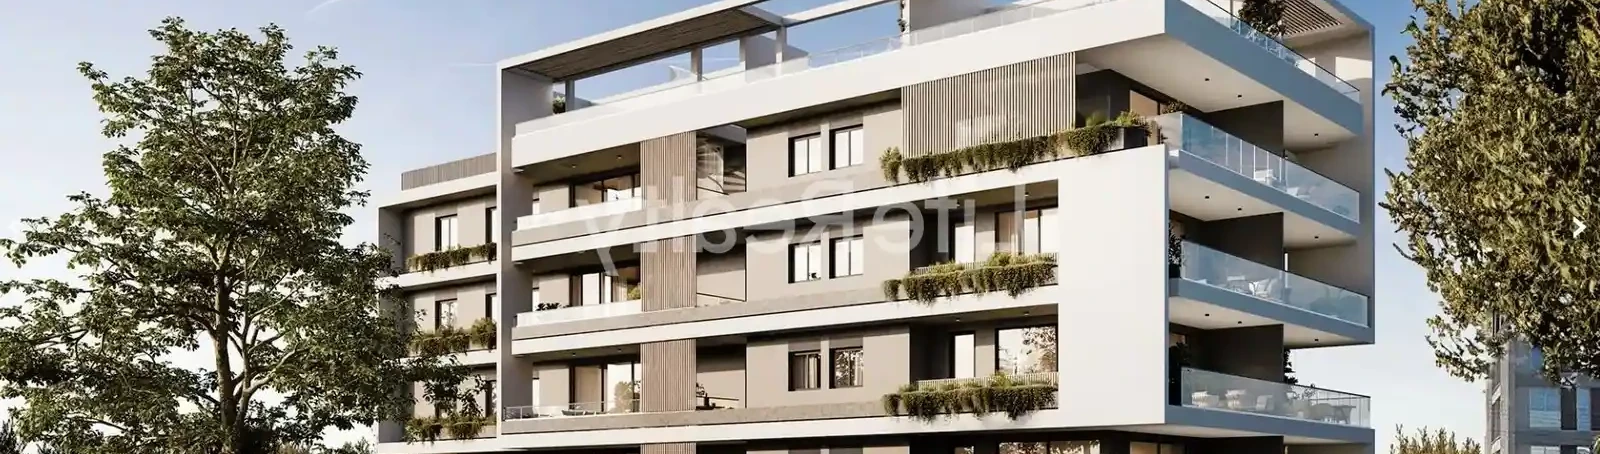 2-bedroom penthouse fоr sаle €550.000, image 1